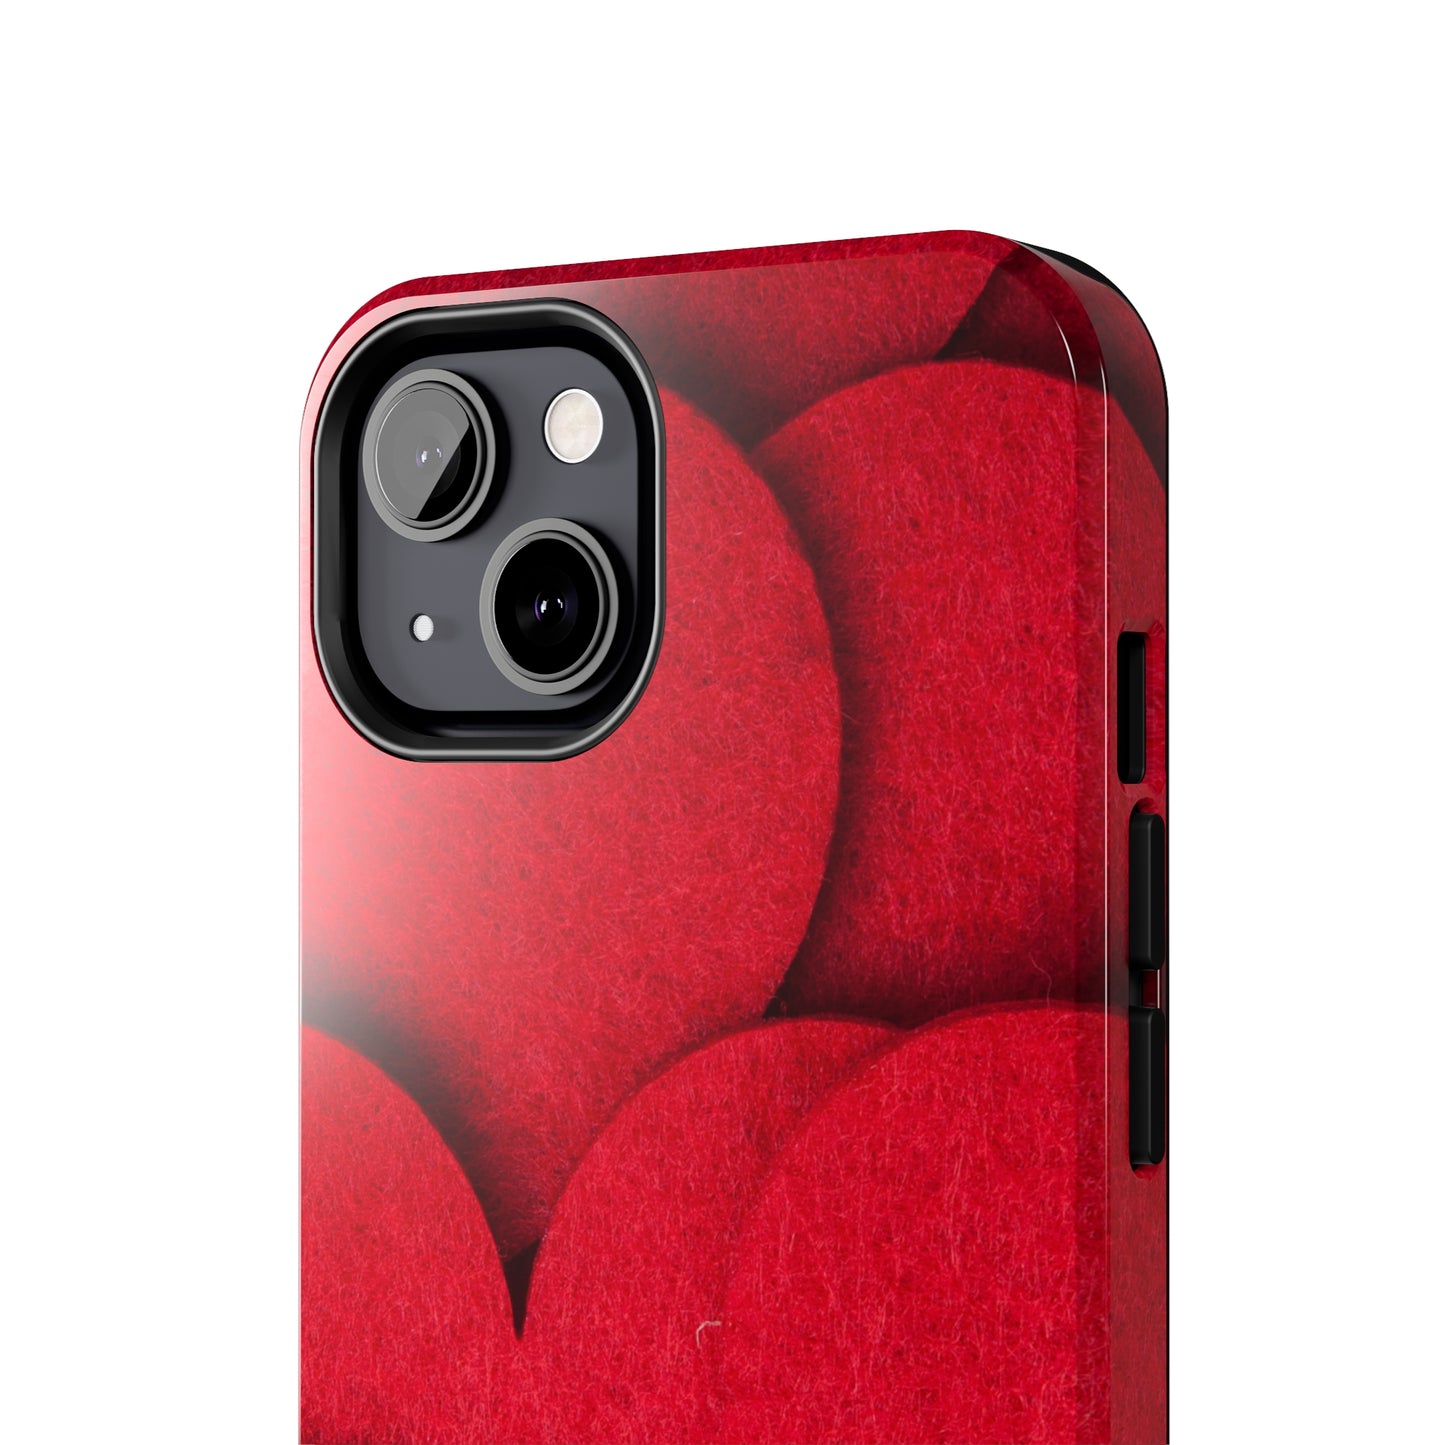 Big Red Felt Hearts Phone Case